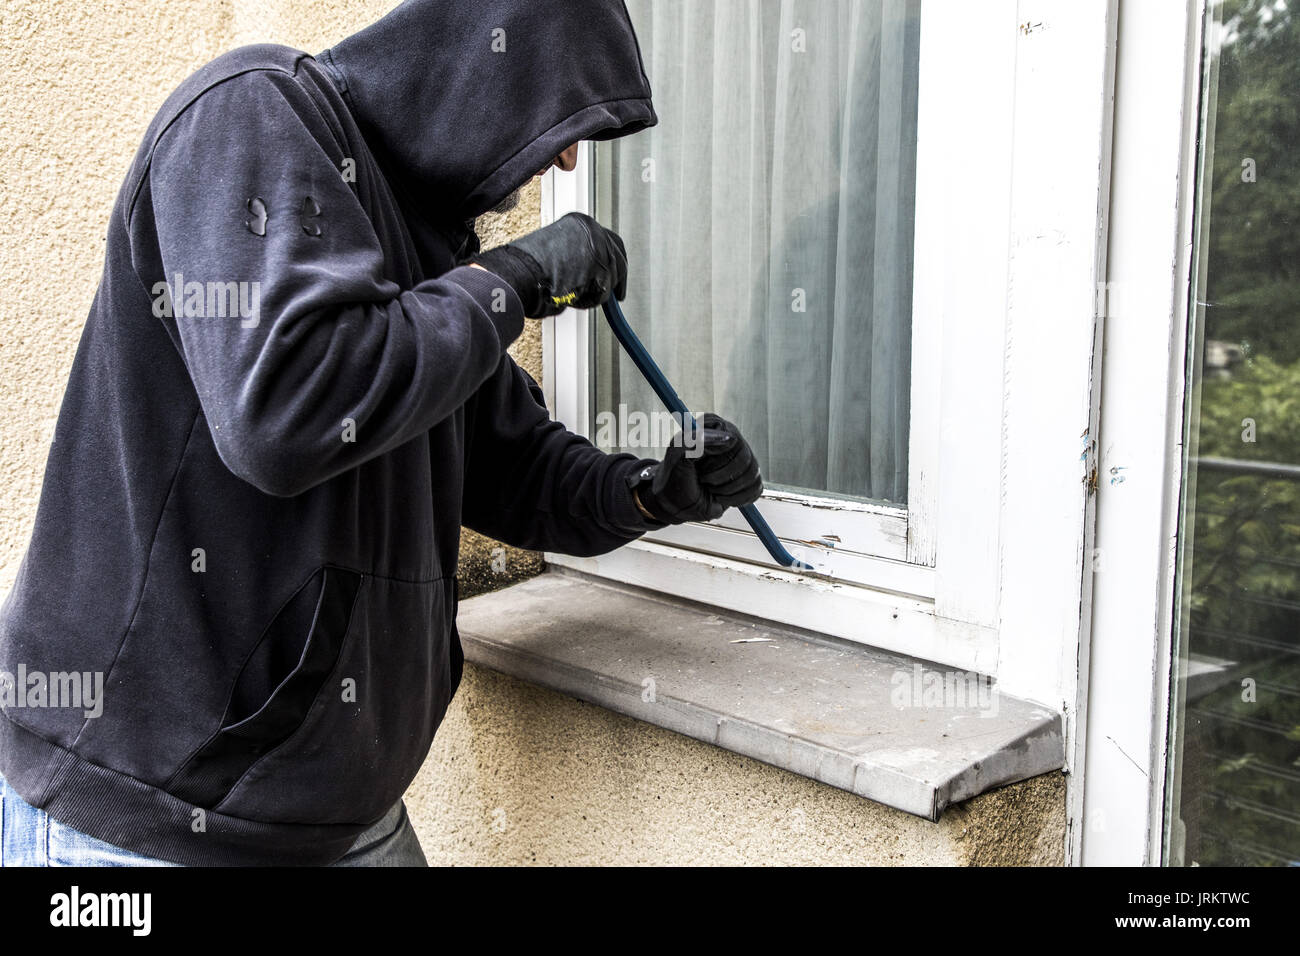 Symbol image, Apartment burglary,  burglar tries to break into an apartment, breaking up a window with tool, Stock Photo